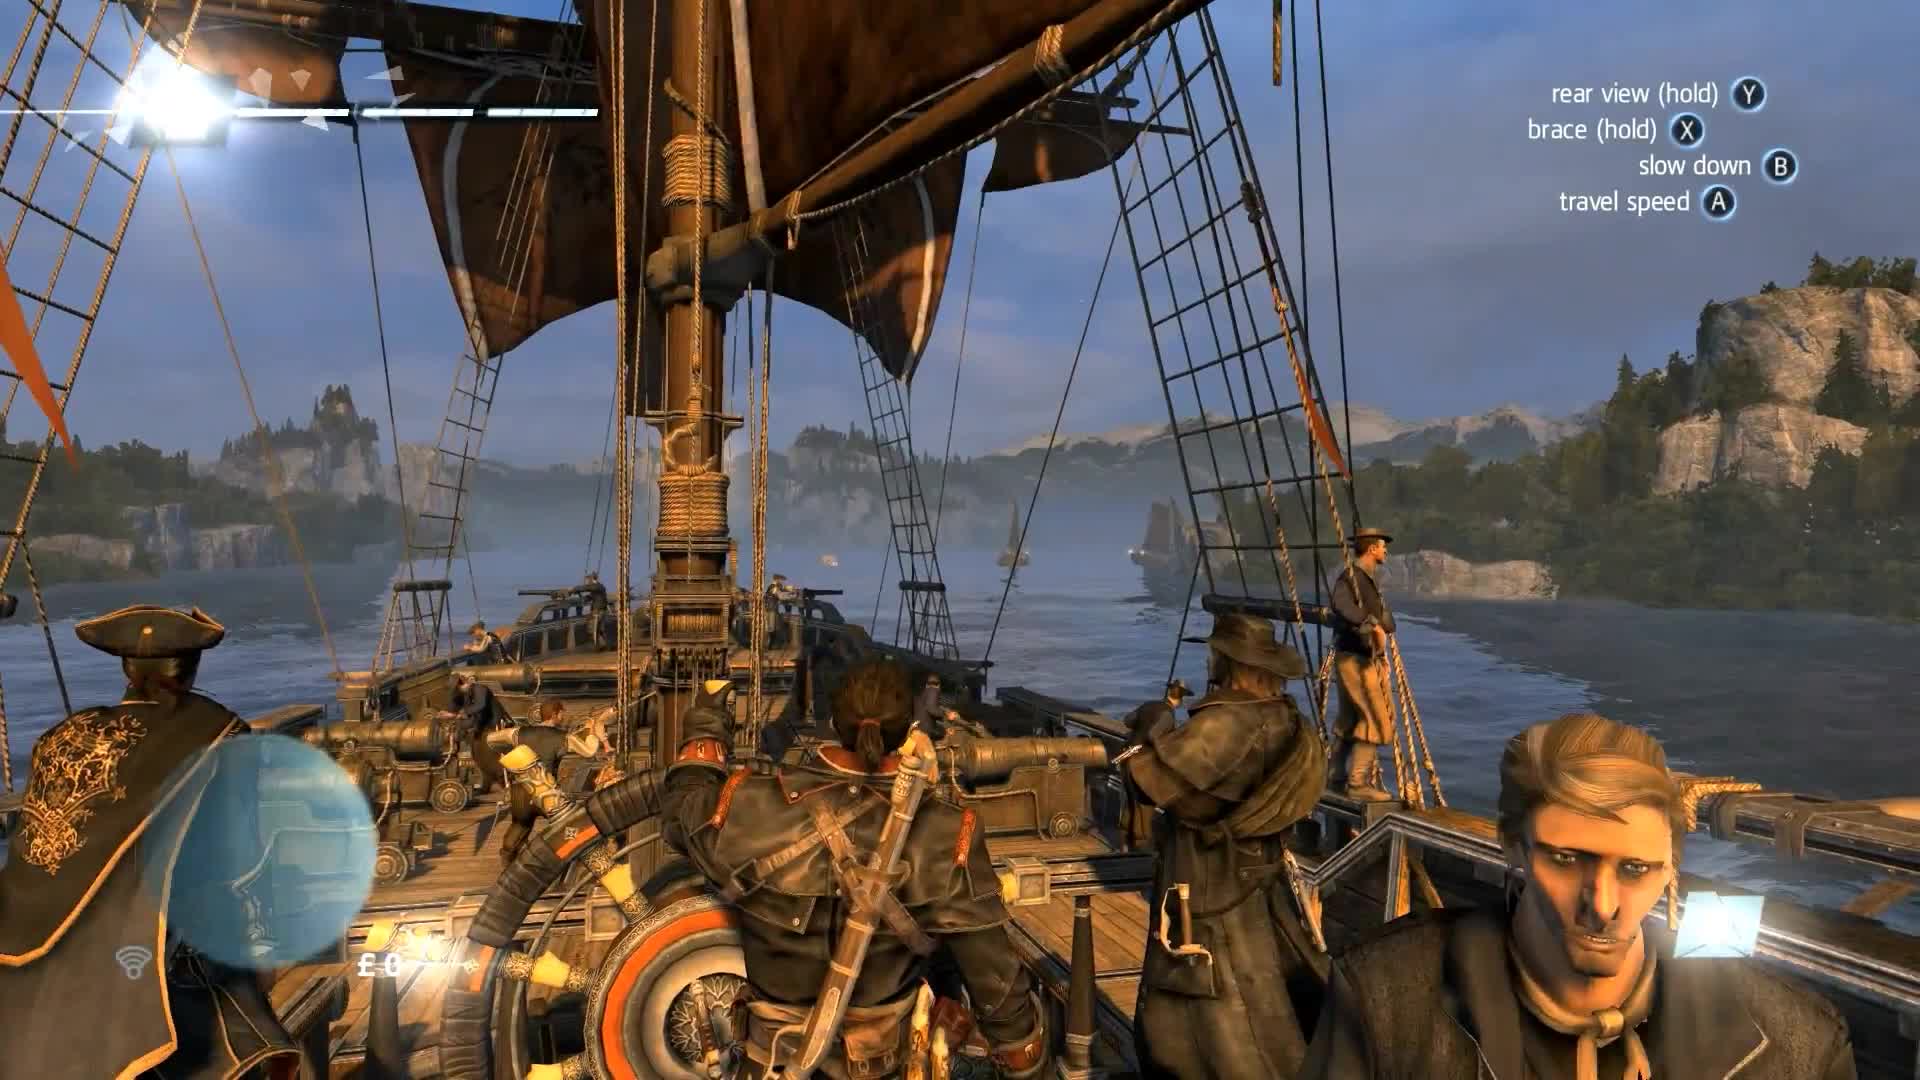 Assassins Creed: Rogue - River Valley gameplay